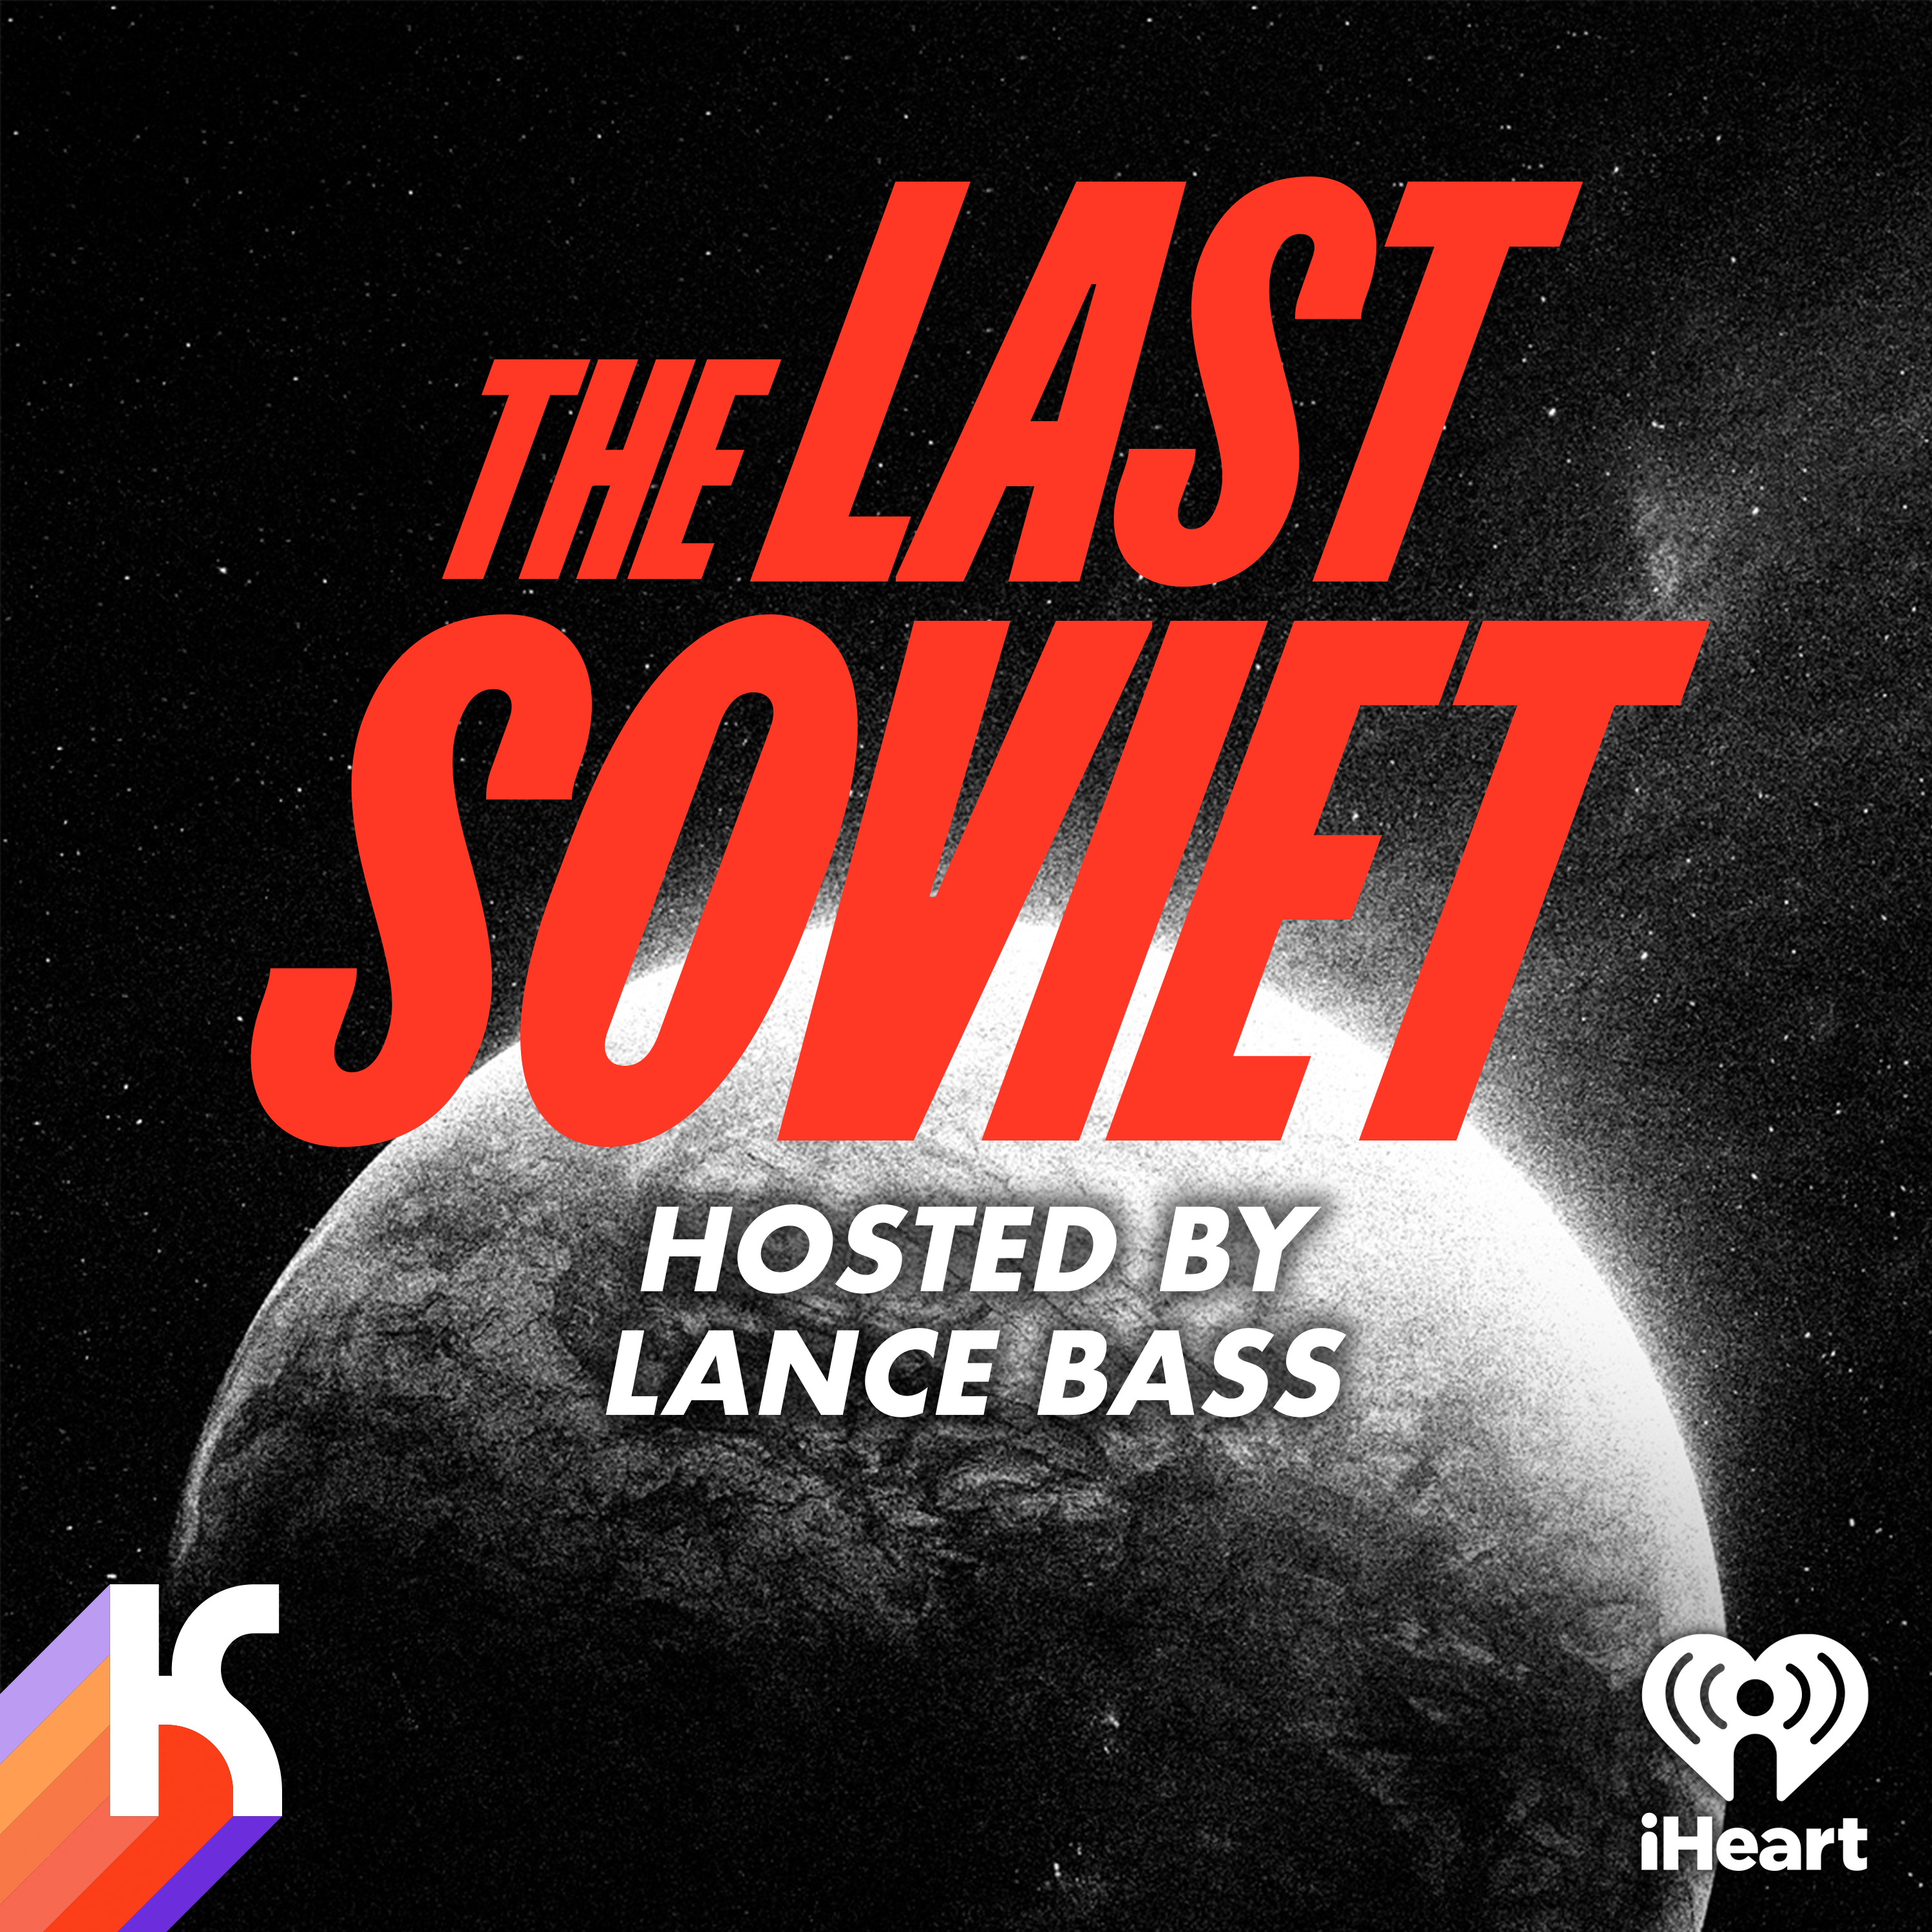 THE LAST SOVIET - EP 7: Homecoming